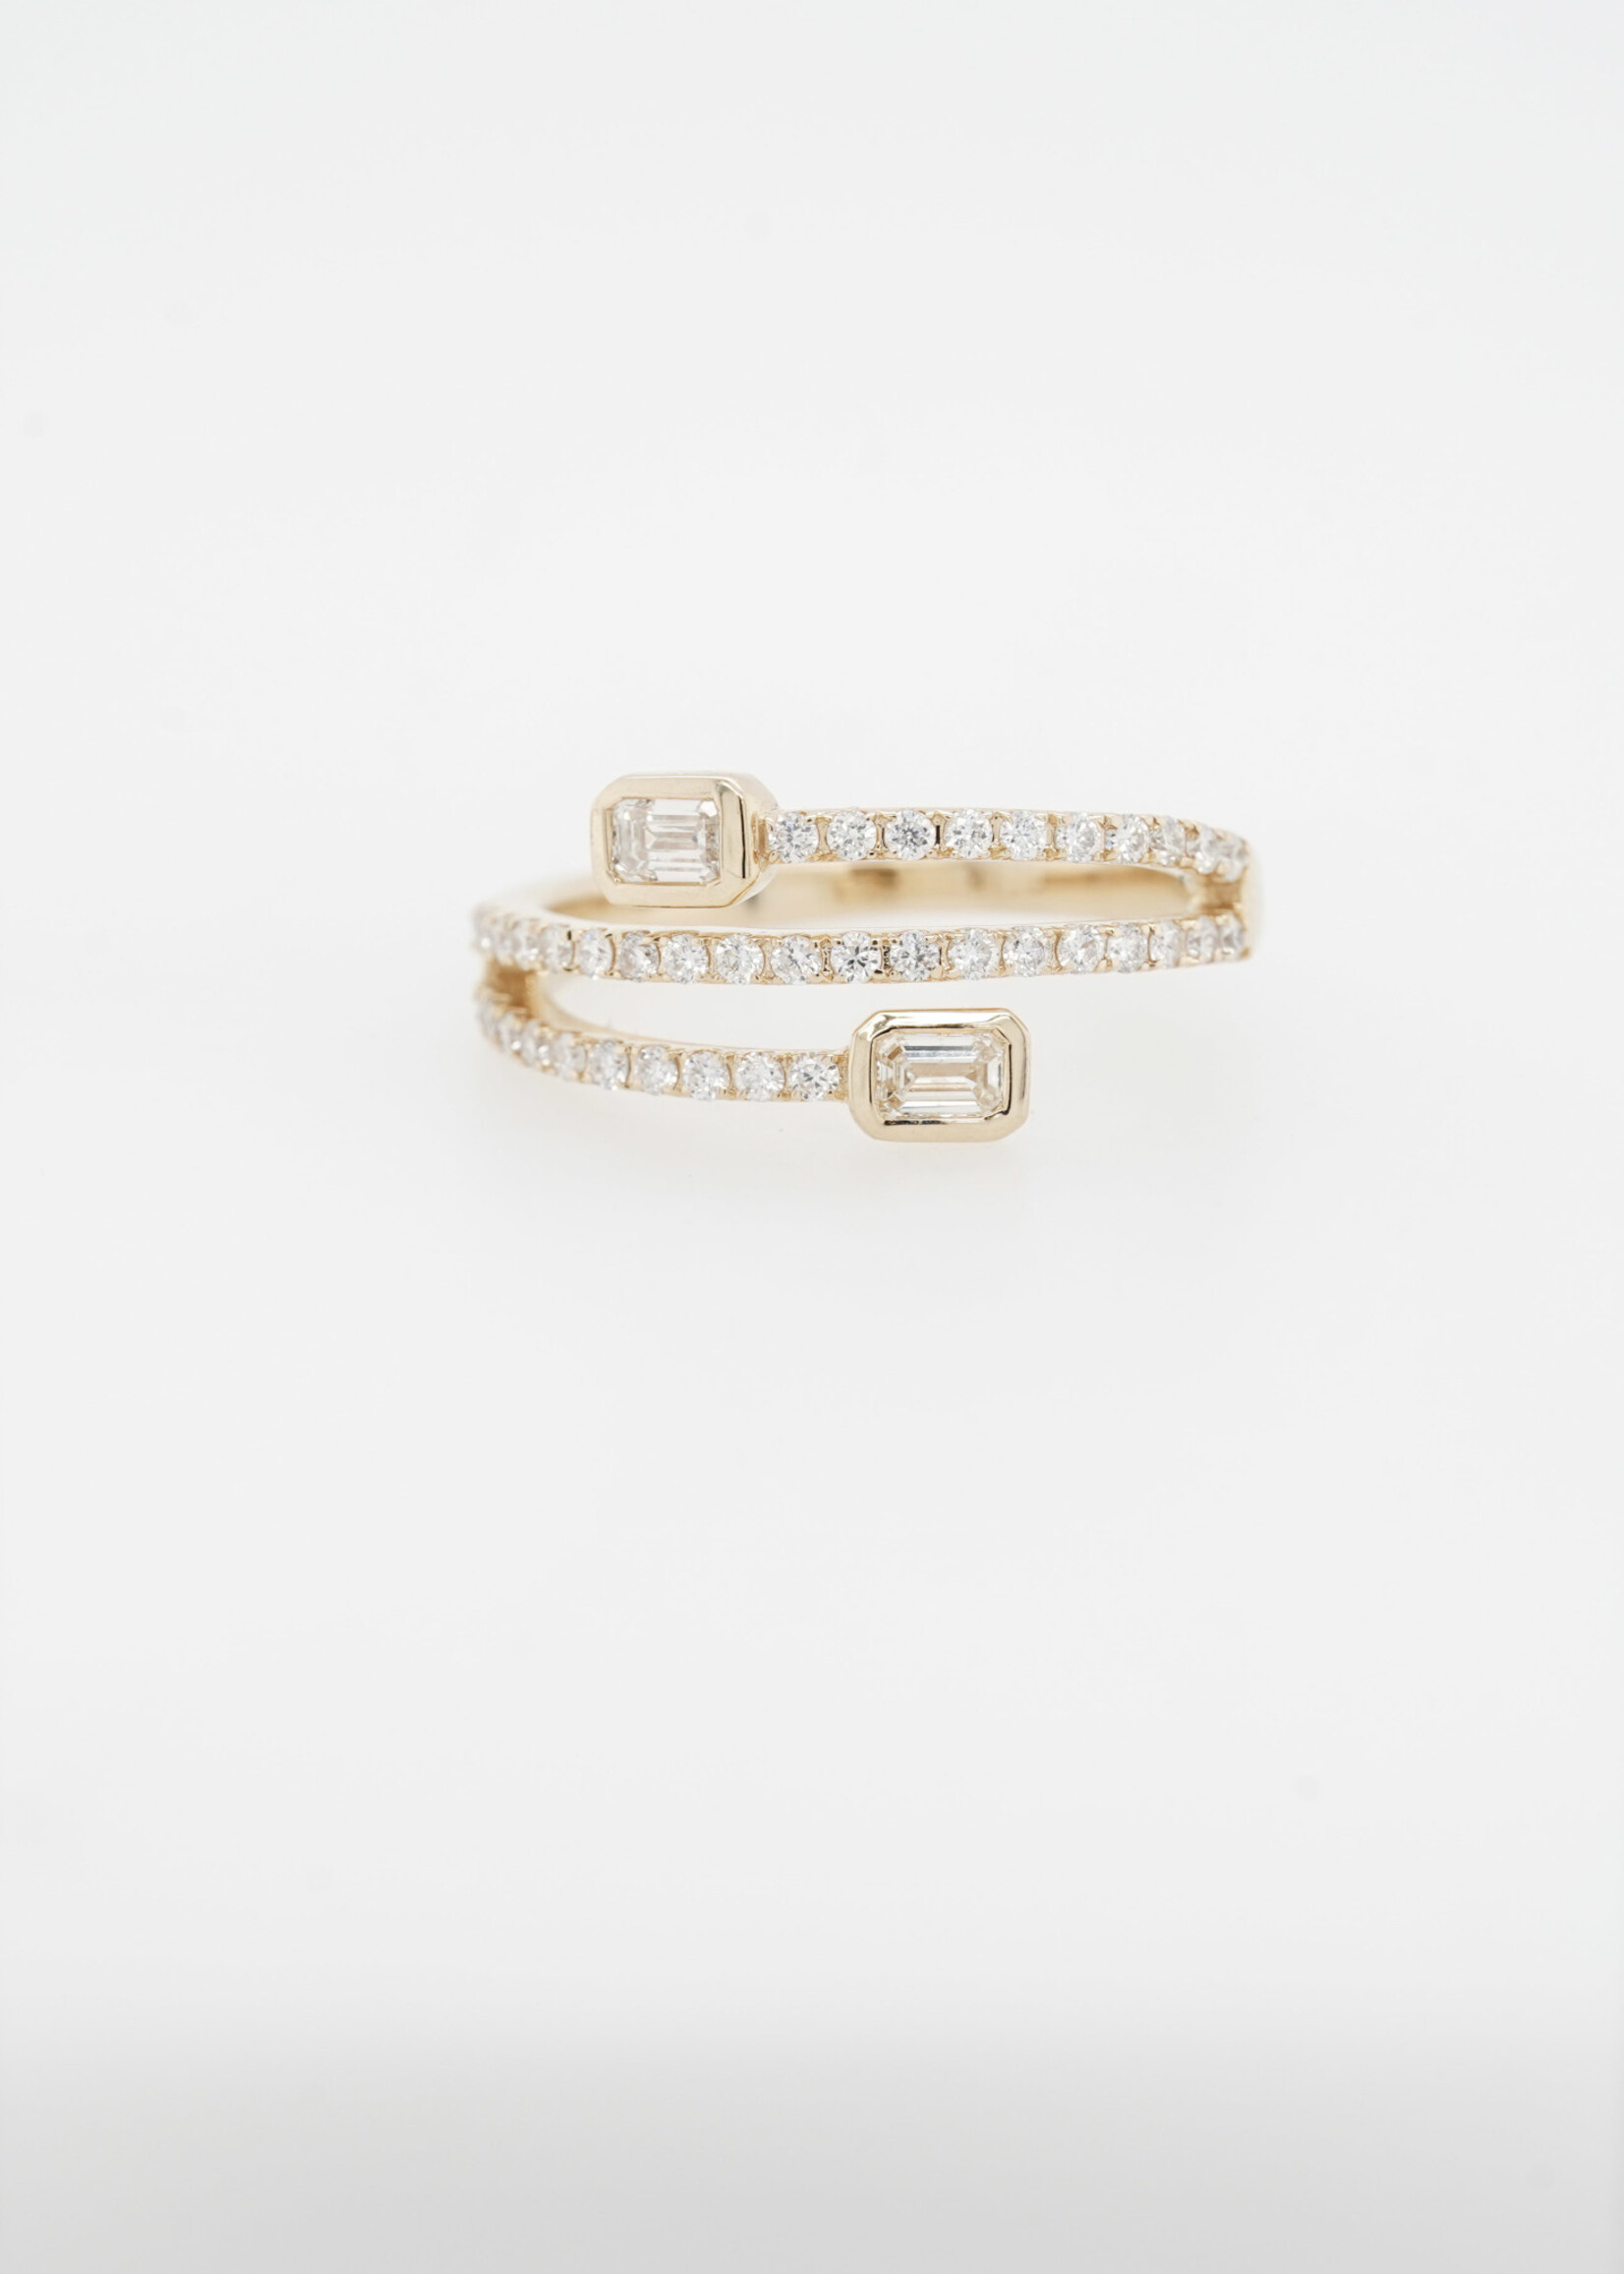 14KY 3.1g .80ctw Emerald Diamond Bypass Fashion Ring (size 7)